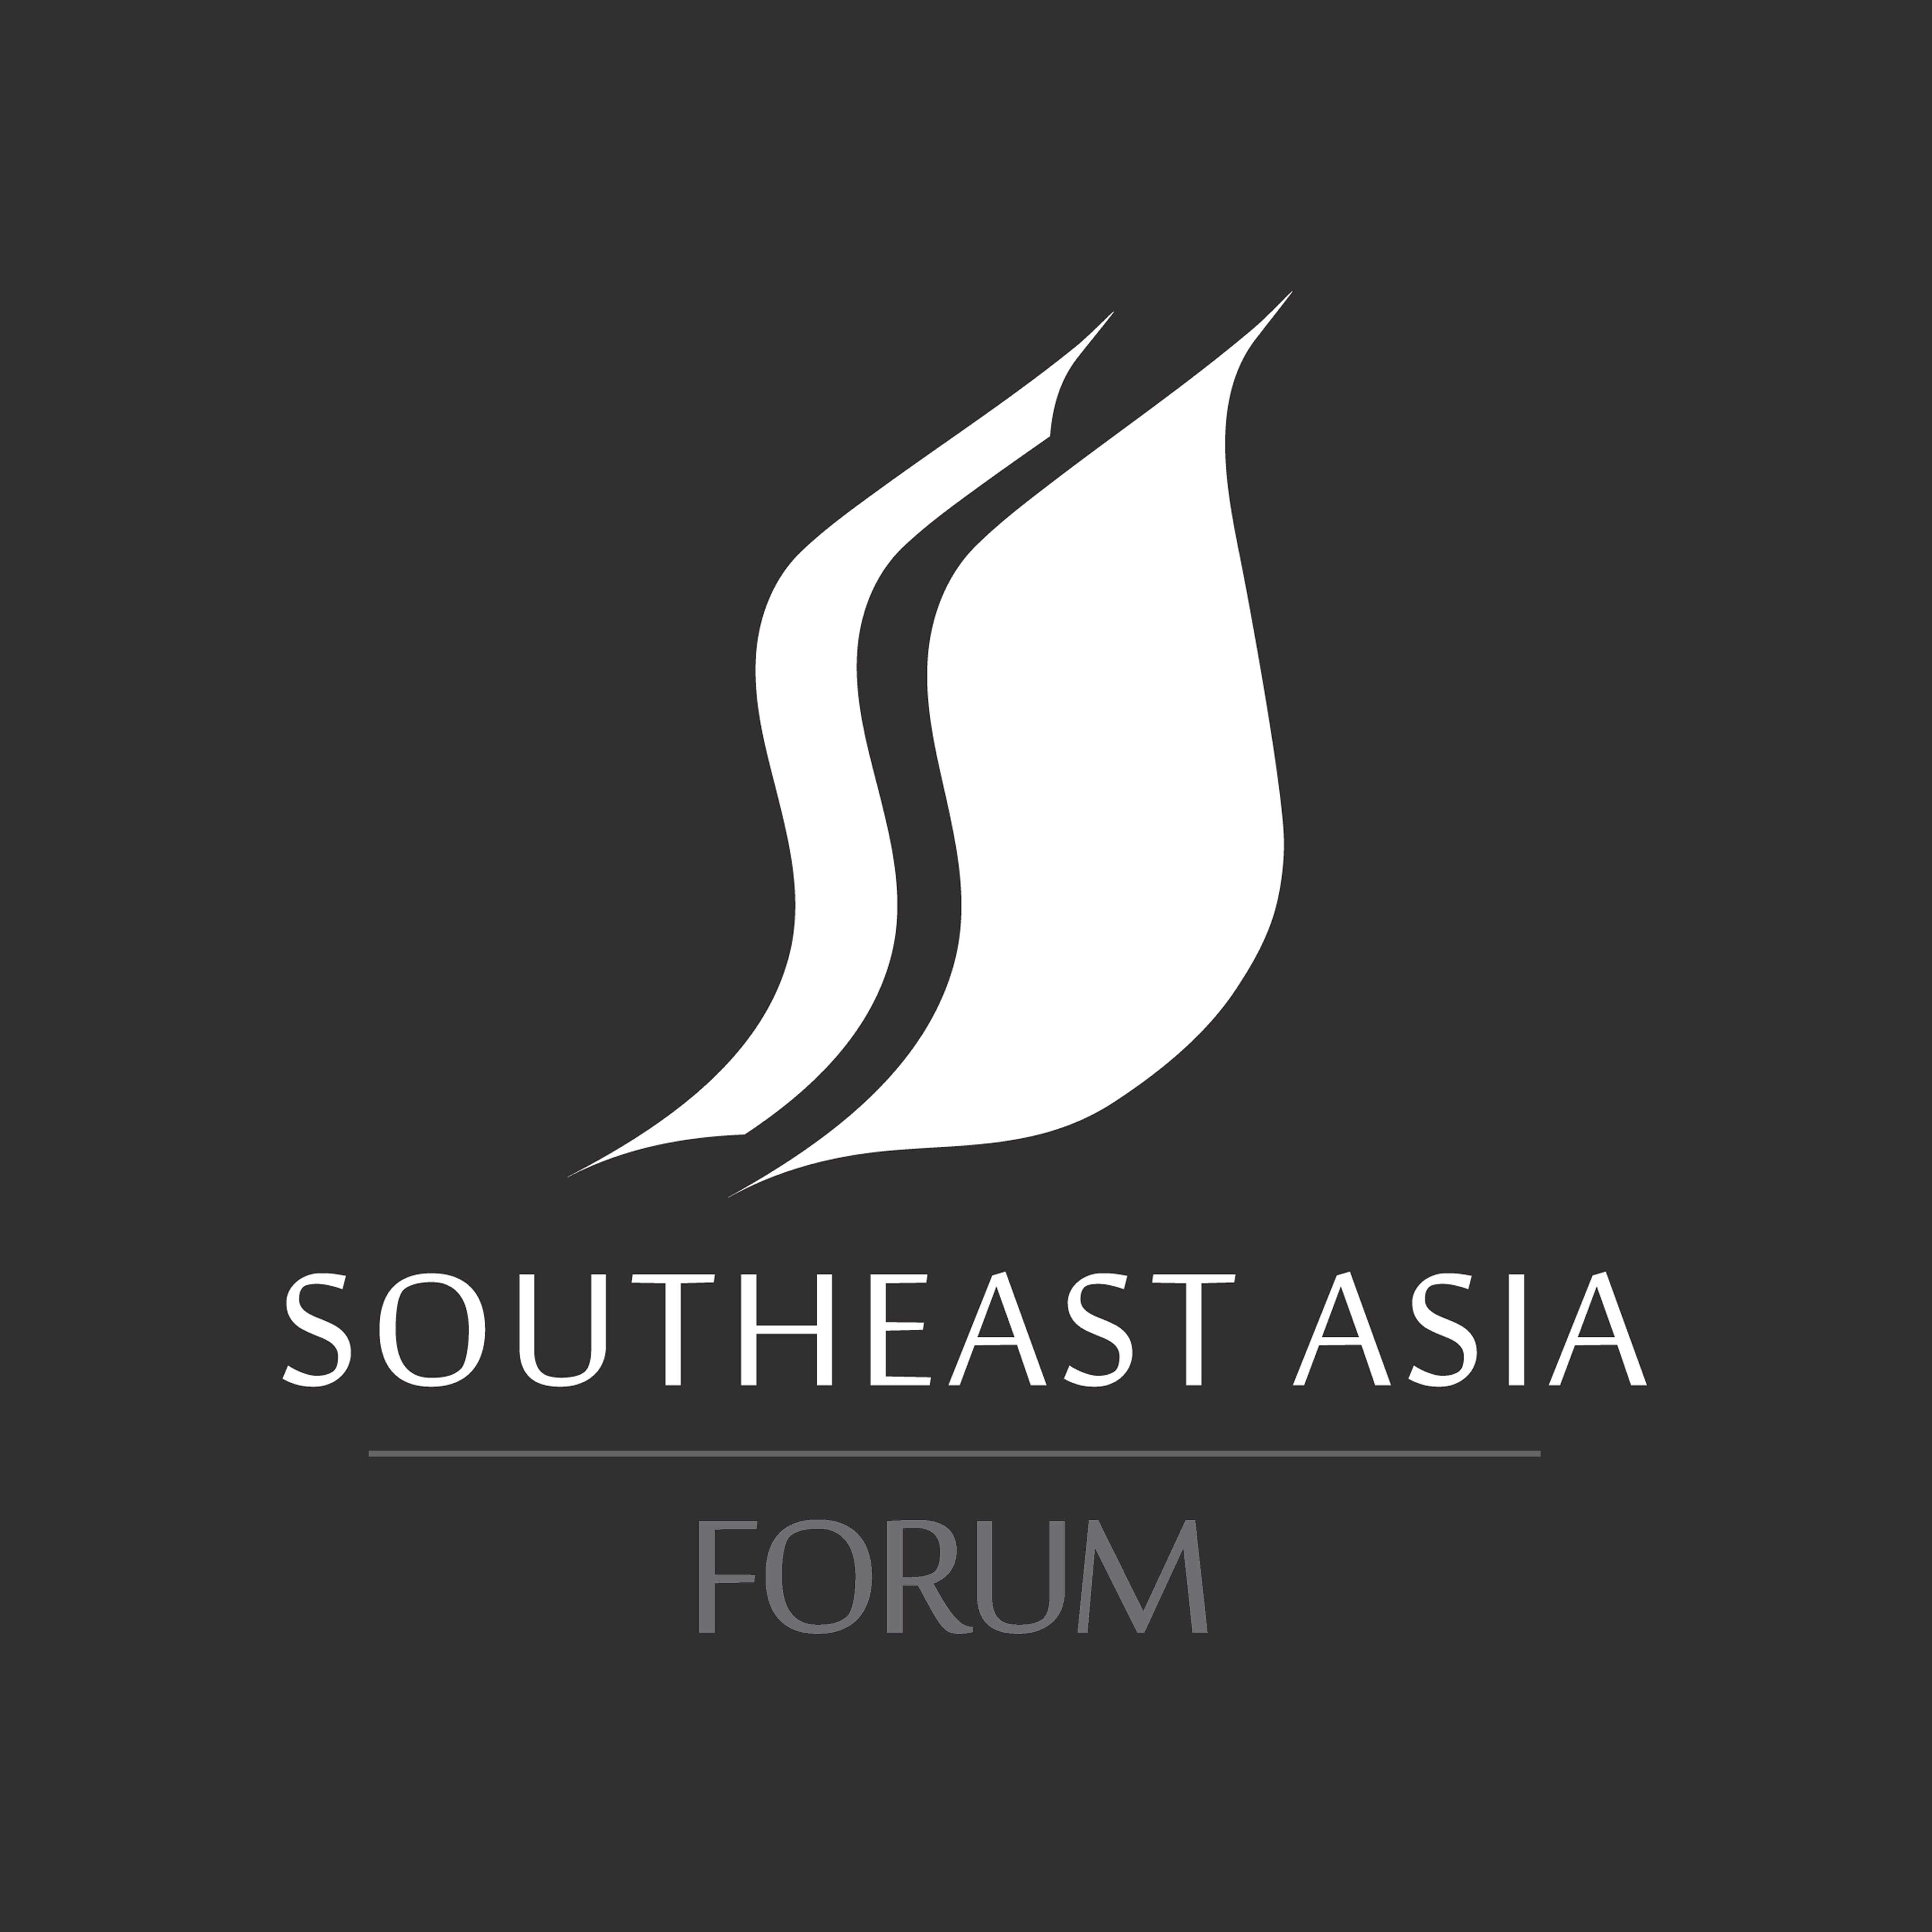 The LSE Southeast Asia Forum logo